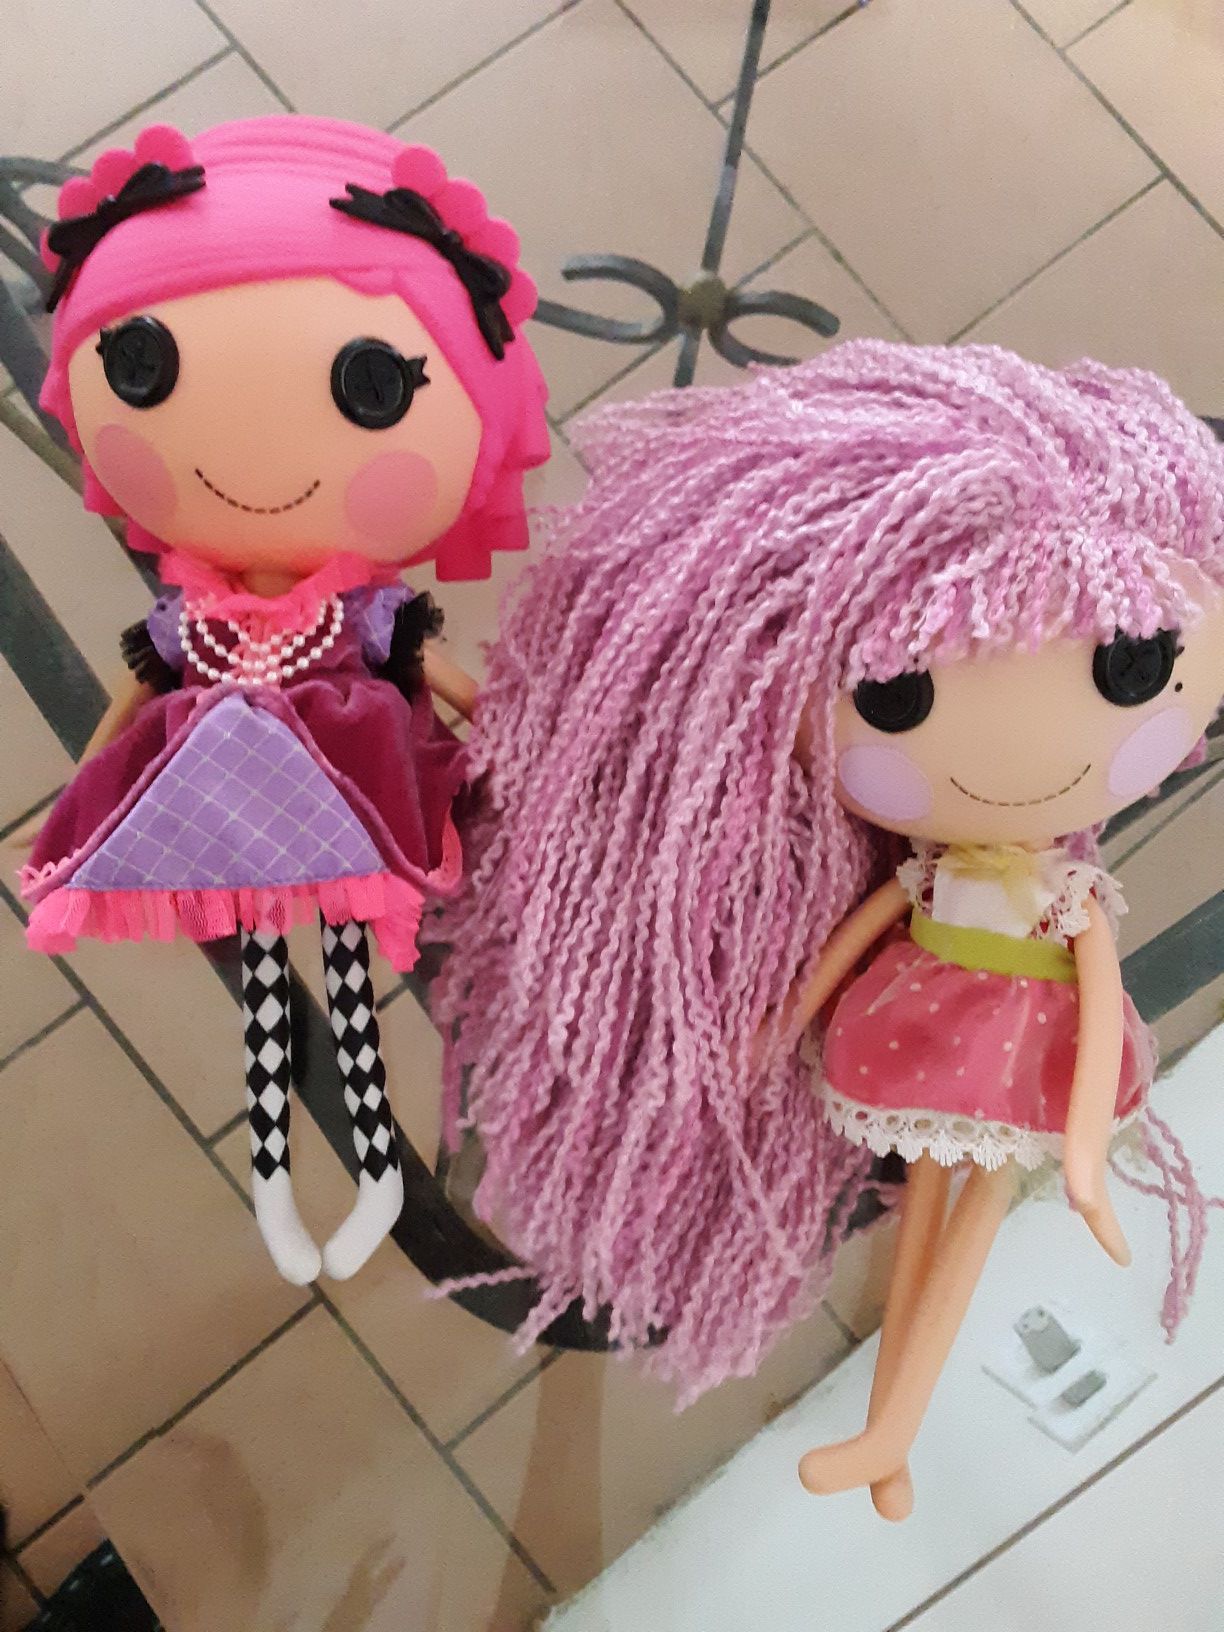 Two Lalaloopsy Dolls